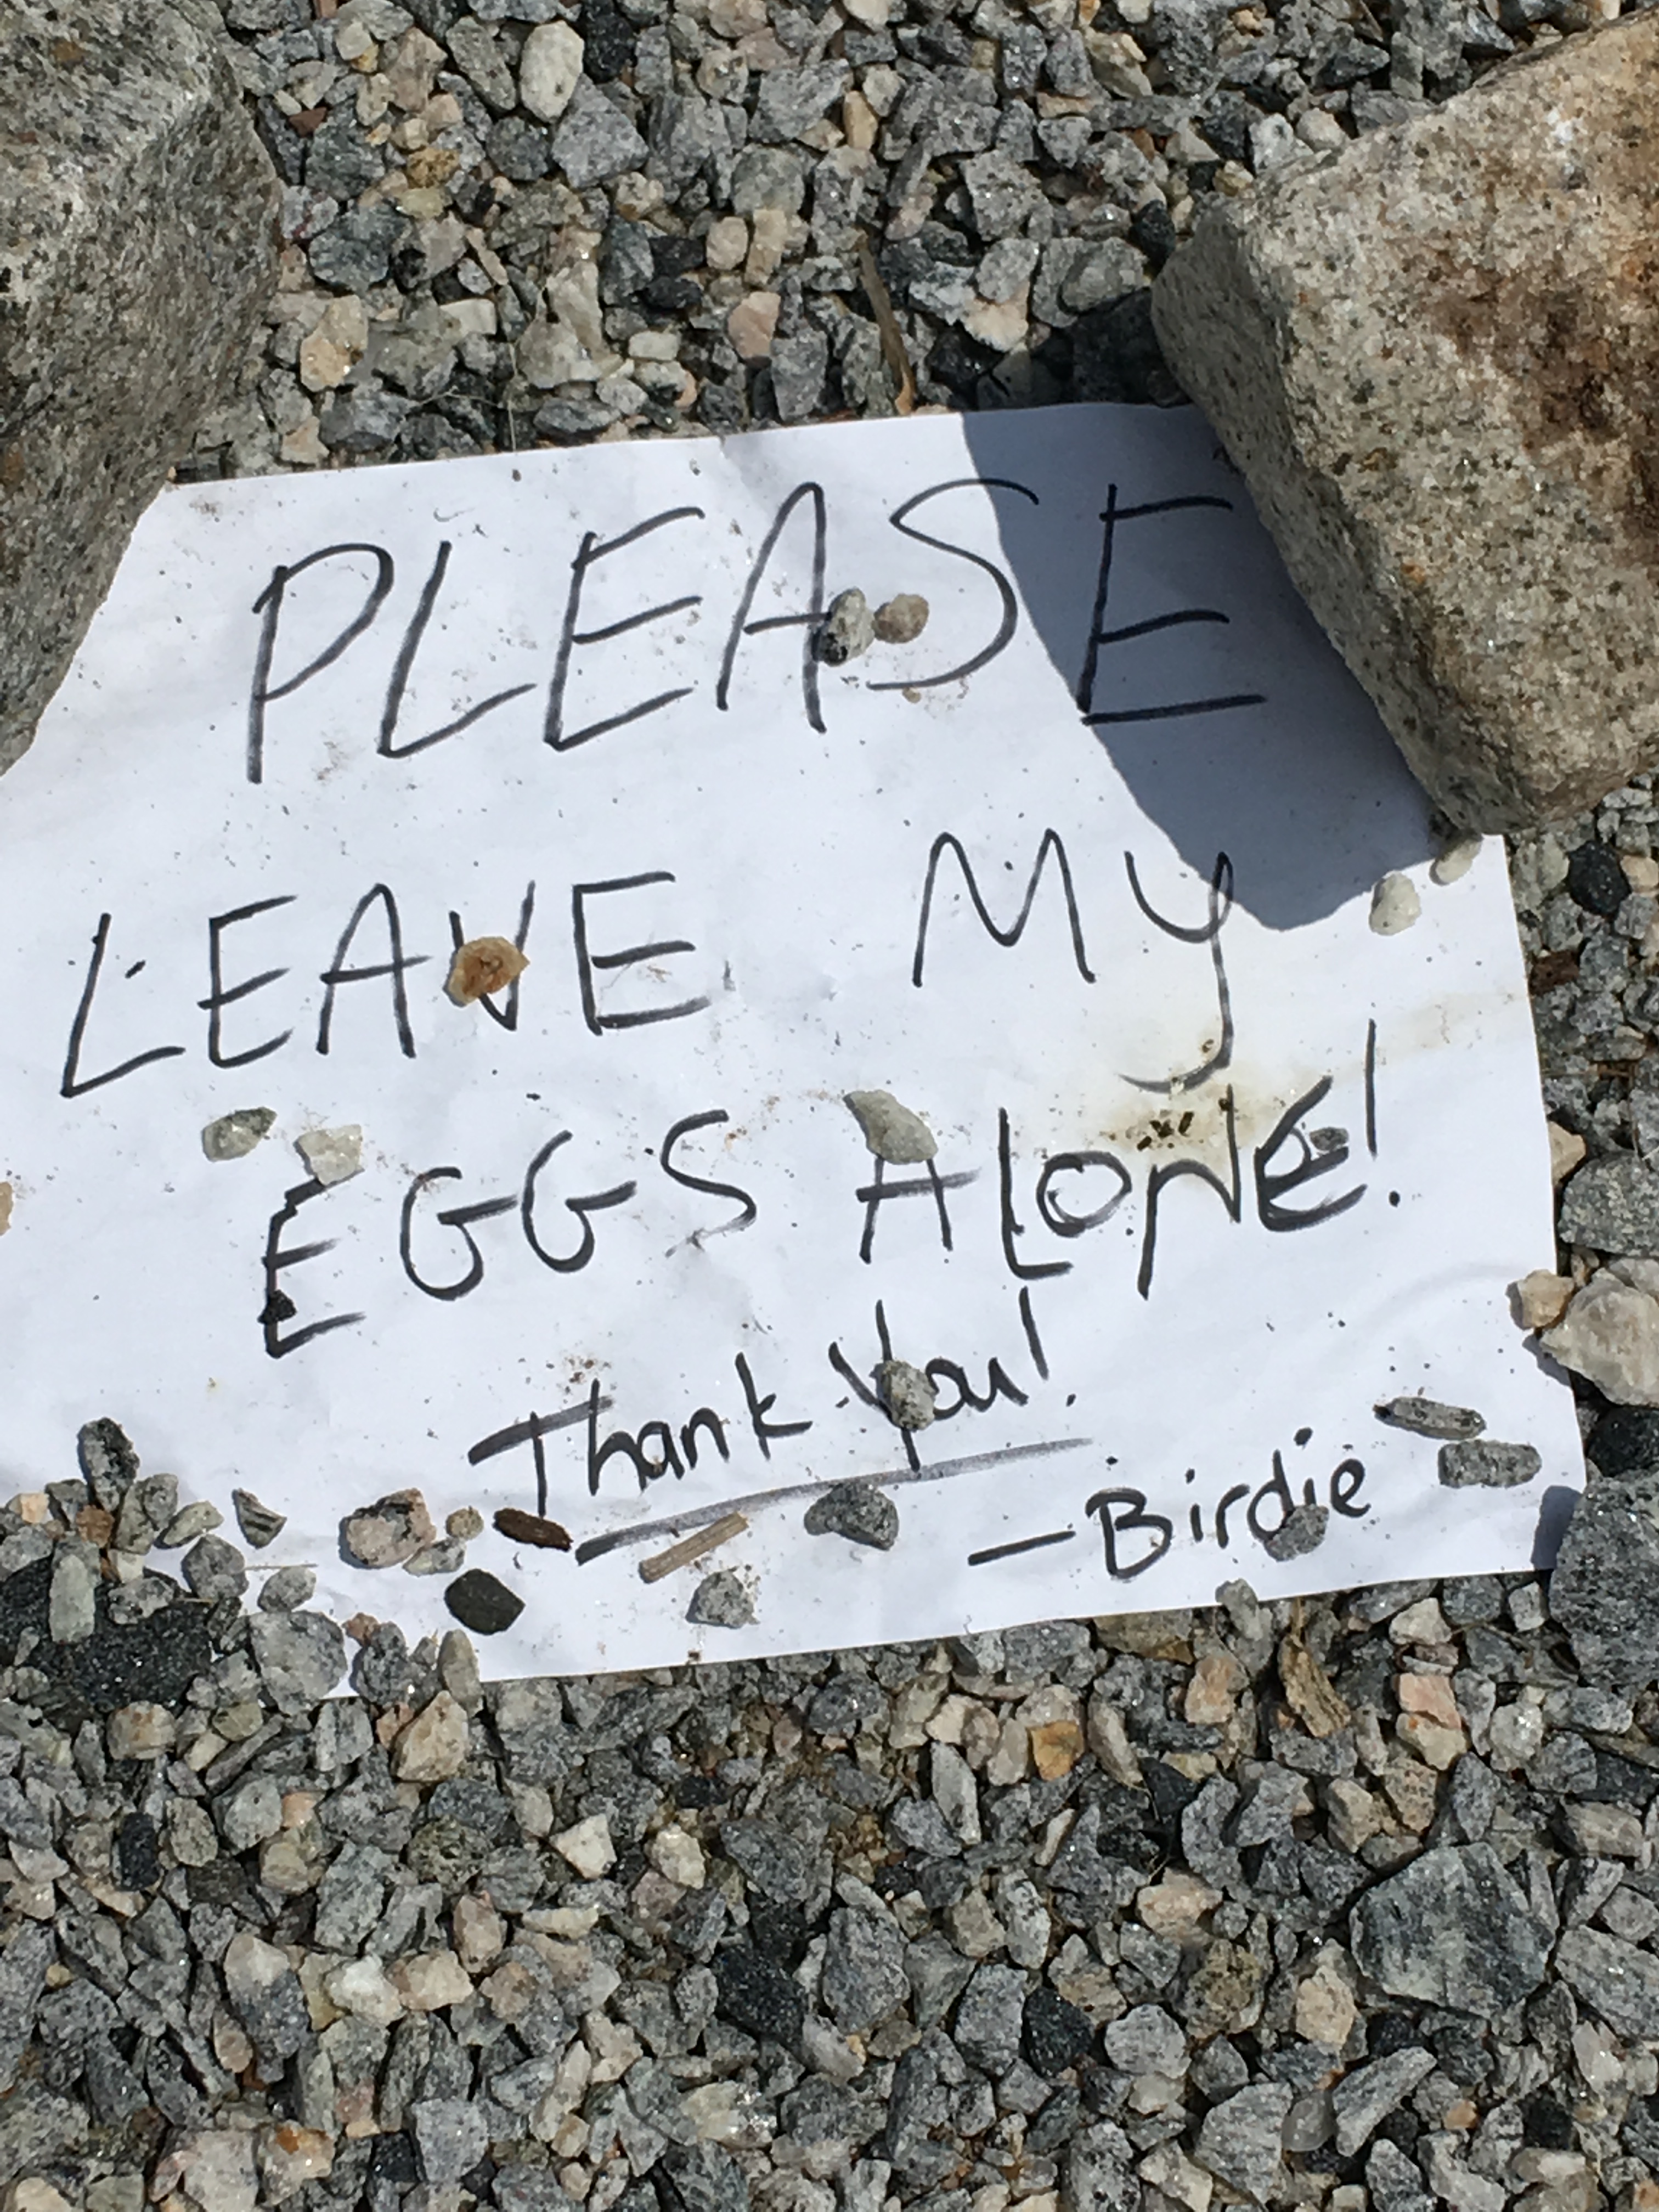 leave eggs alone